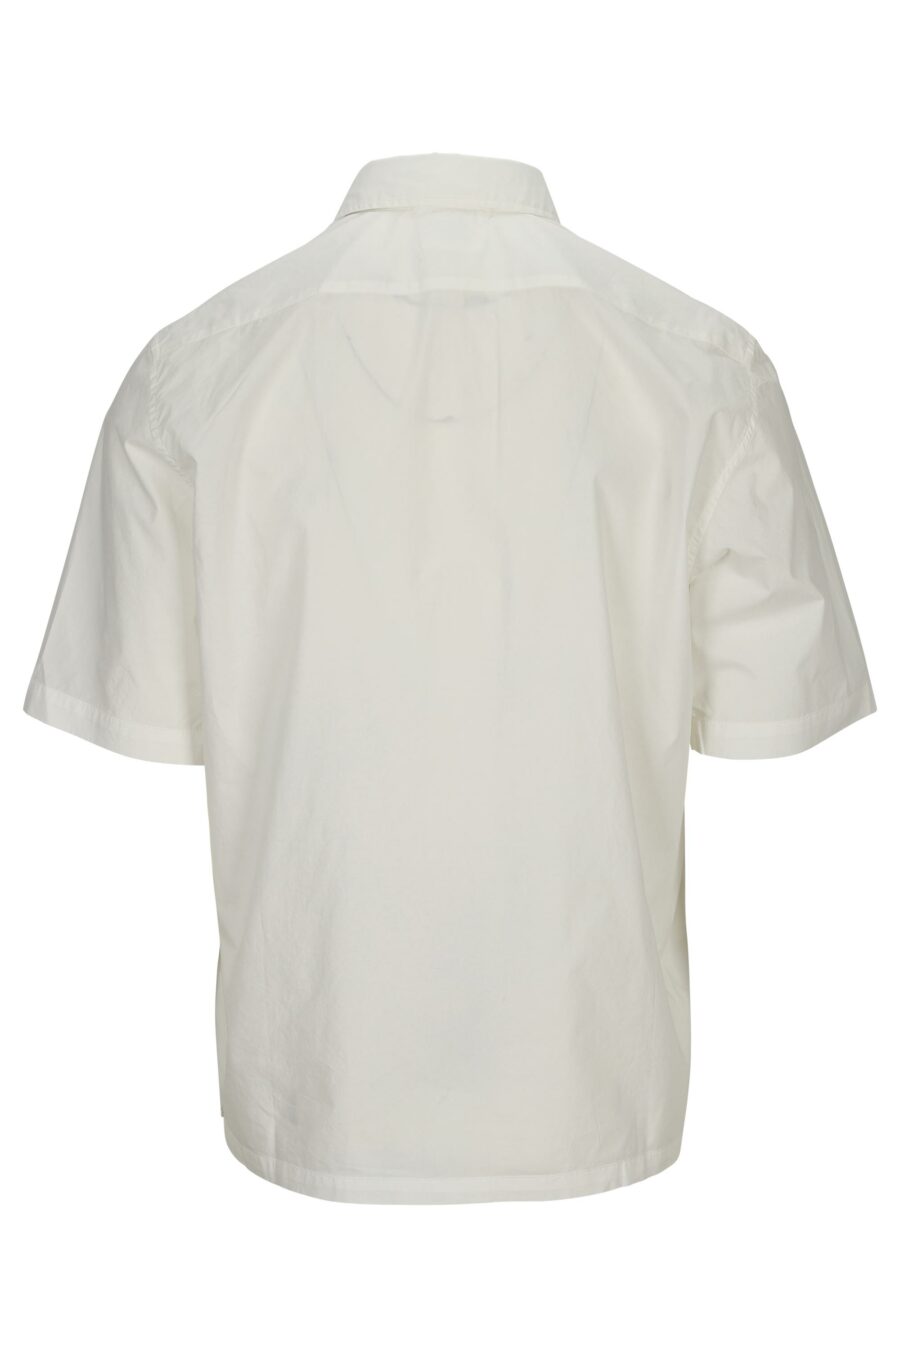 Short sleeve white shirt with pocket and mini-logo - 7620943694826 1